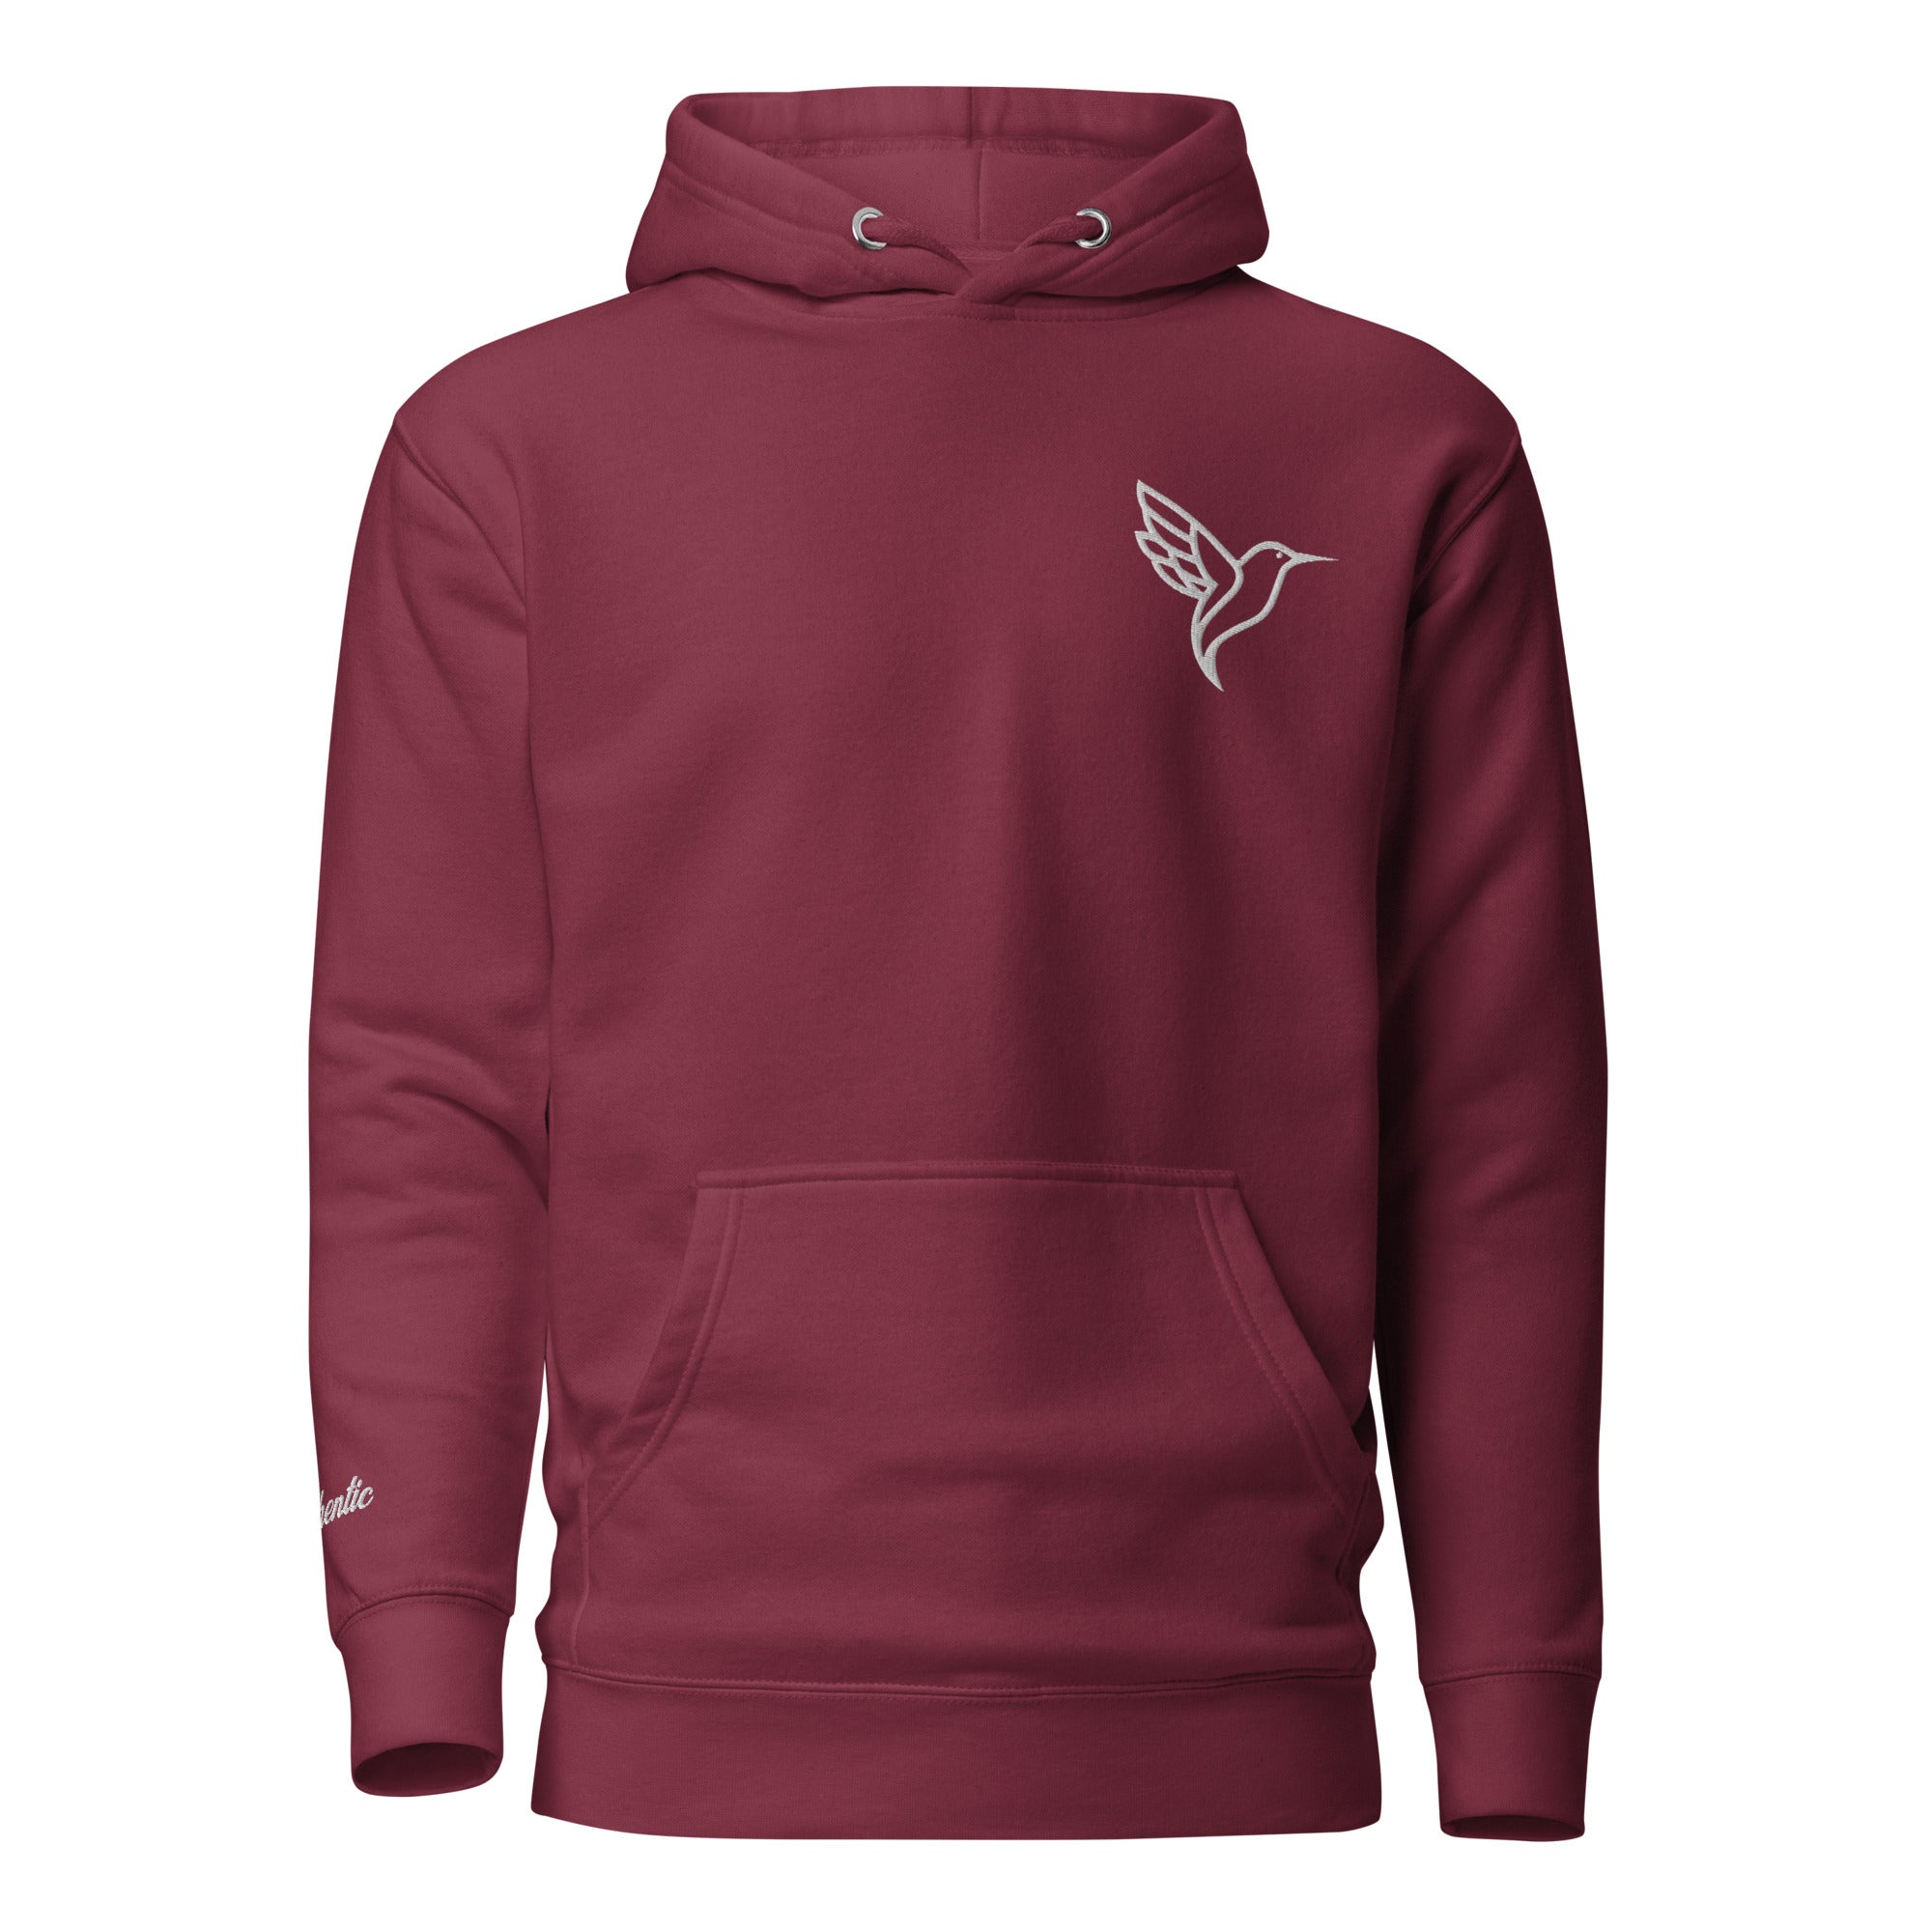 unisex-premium-hoodie-maroon-front-631fce5c4c74f.jpg